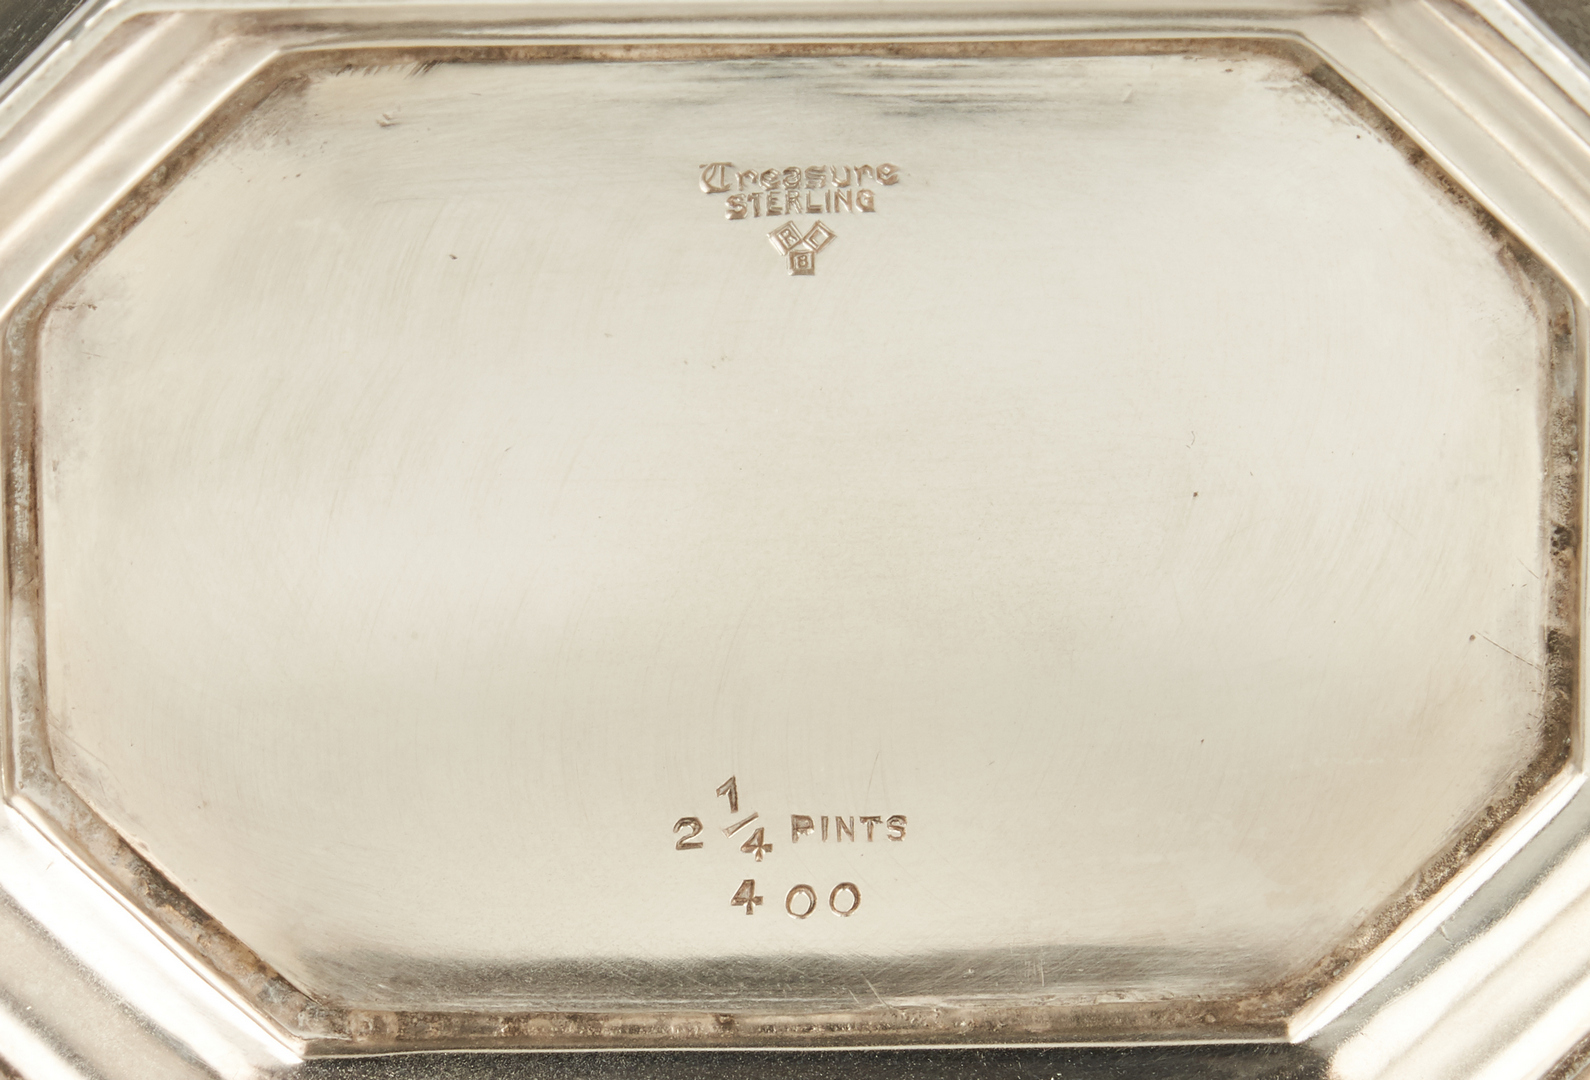 Lot 800: 5 Pc. Sterling Silver Tea Set, Treasure Pattern